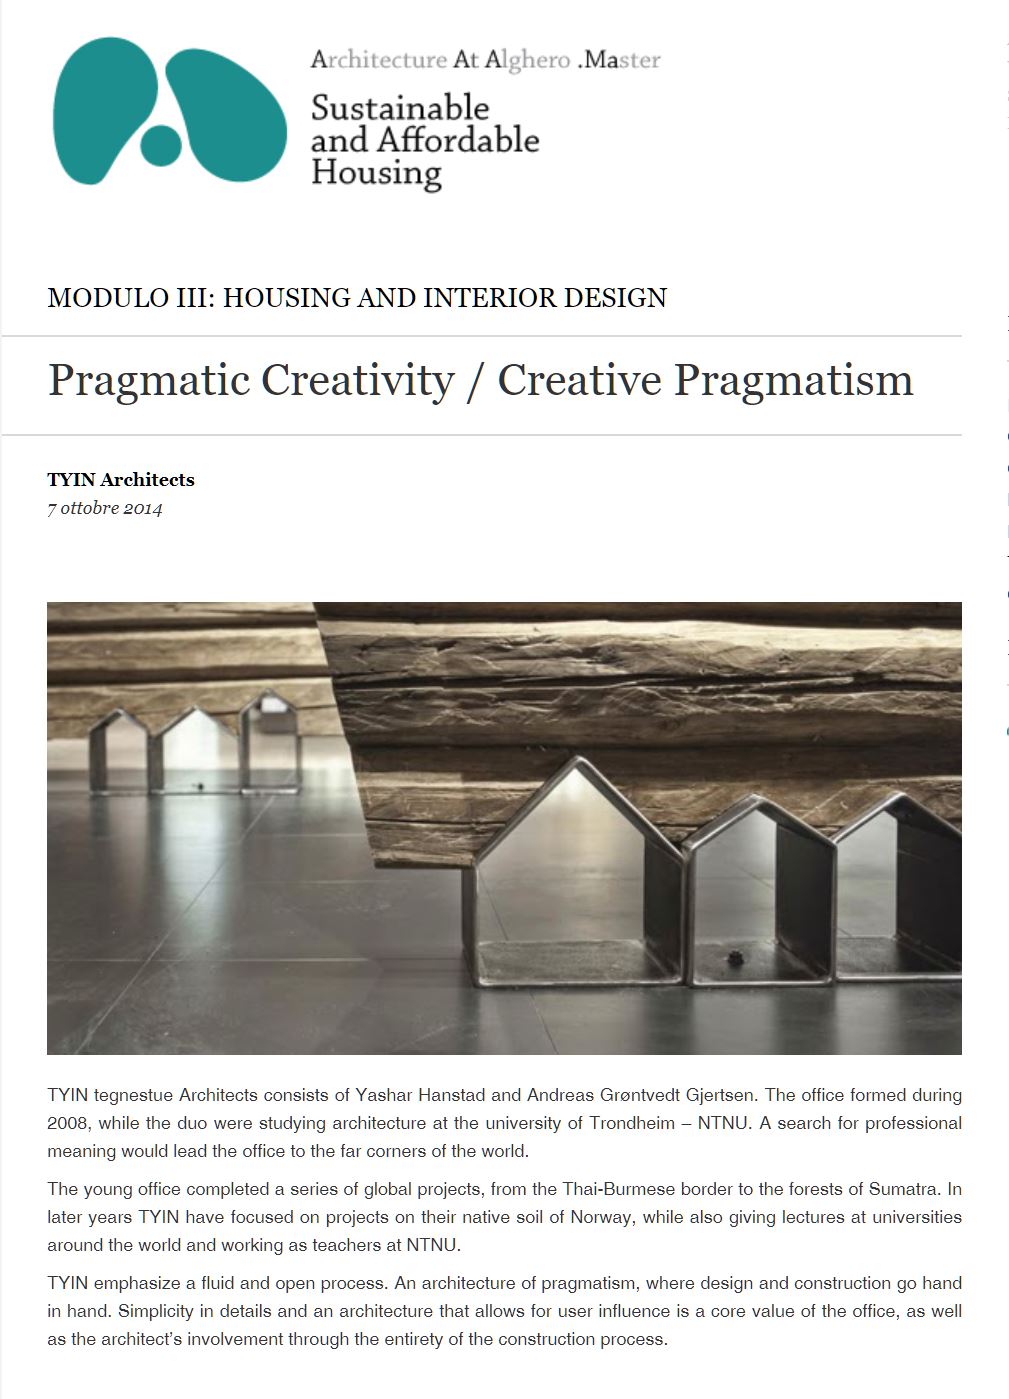 Pragmatic Creativity / Creative Pragmatism